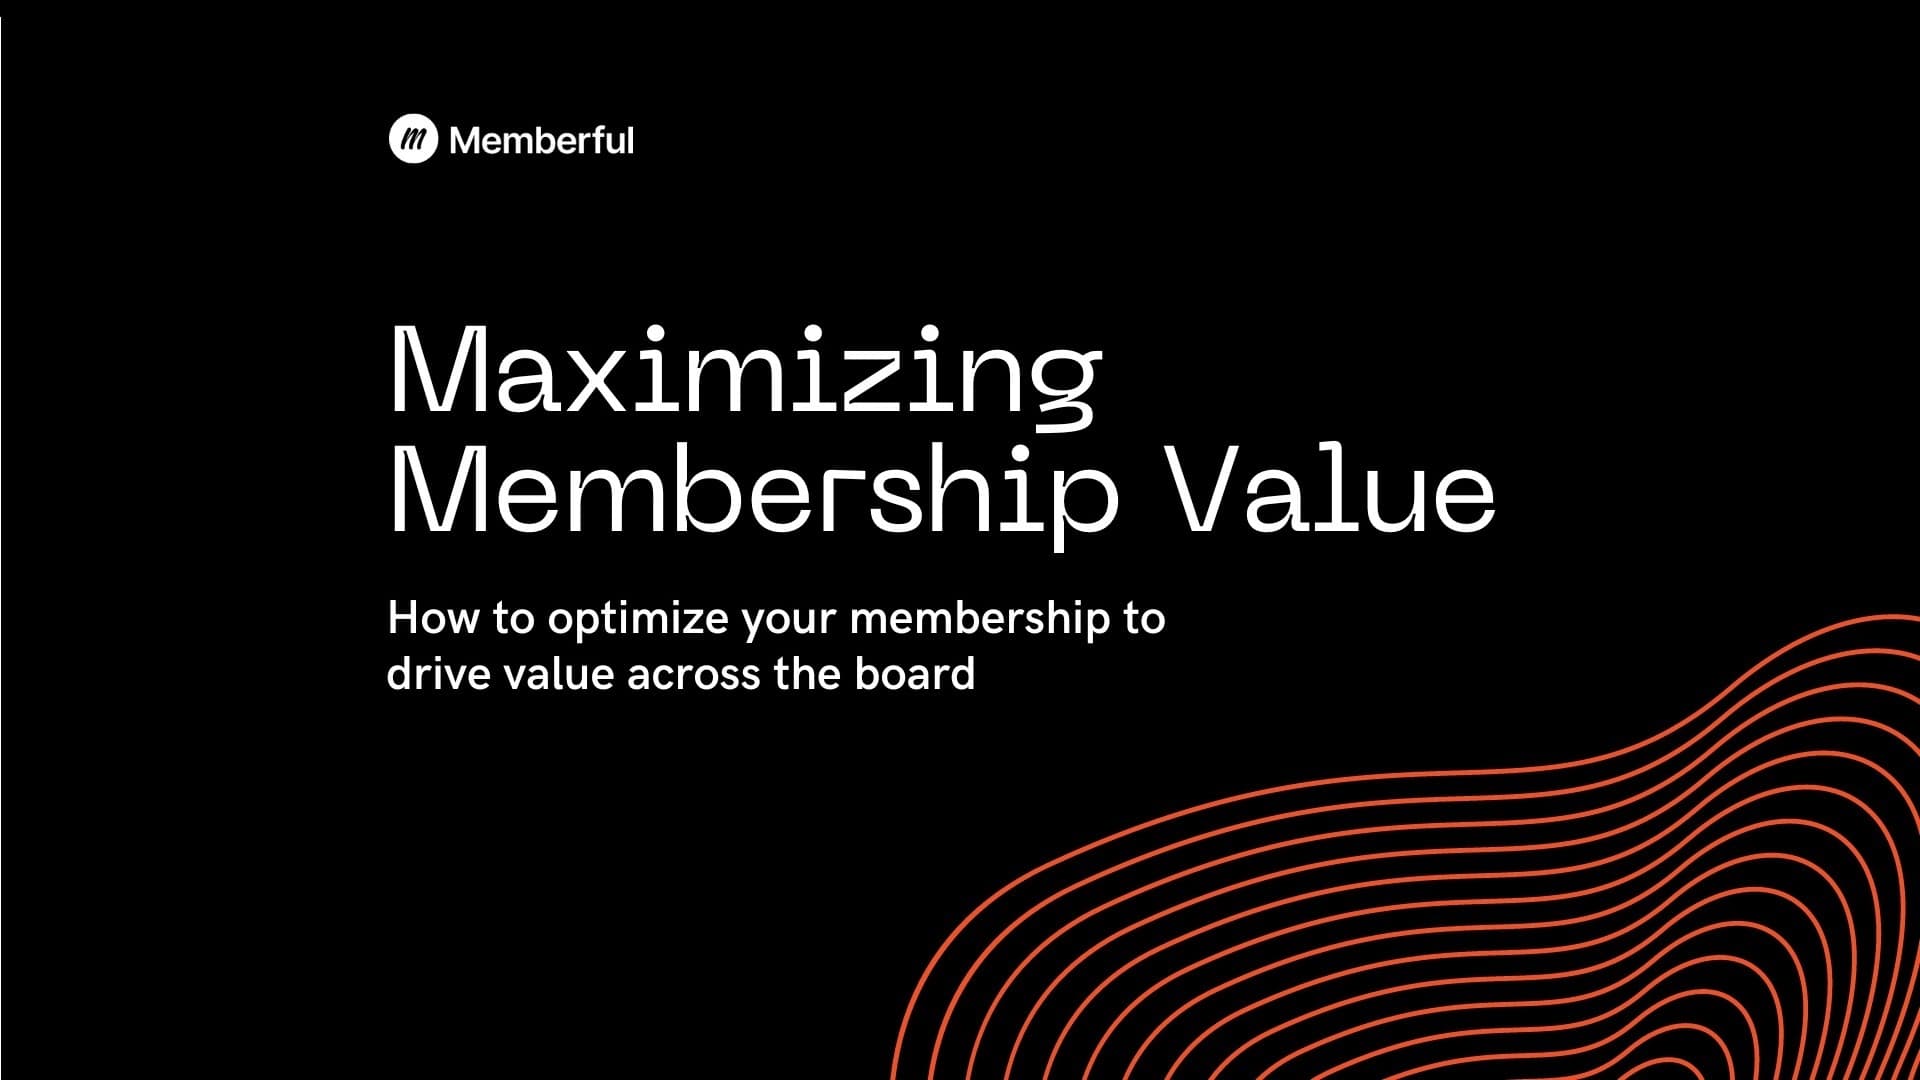 Optimize your membership to maximize lifetime value